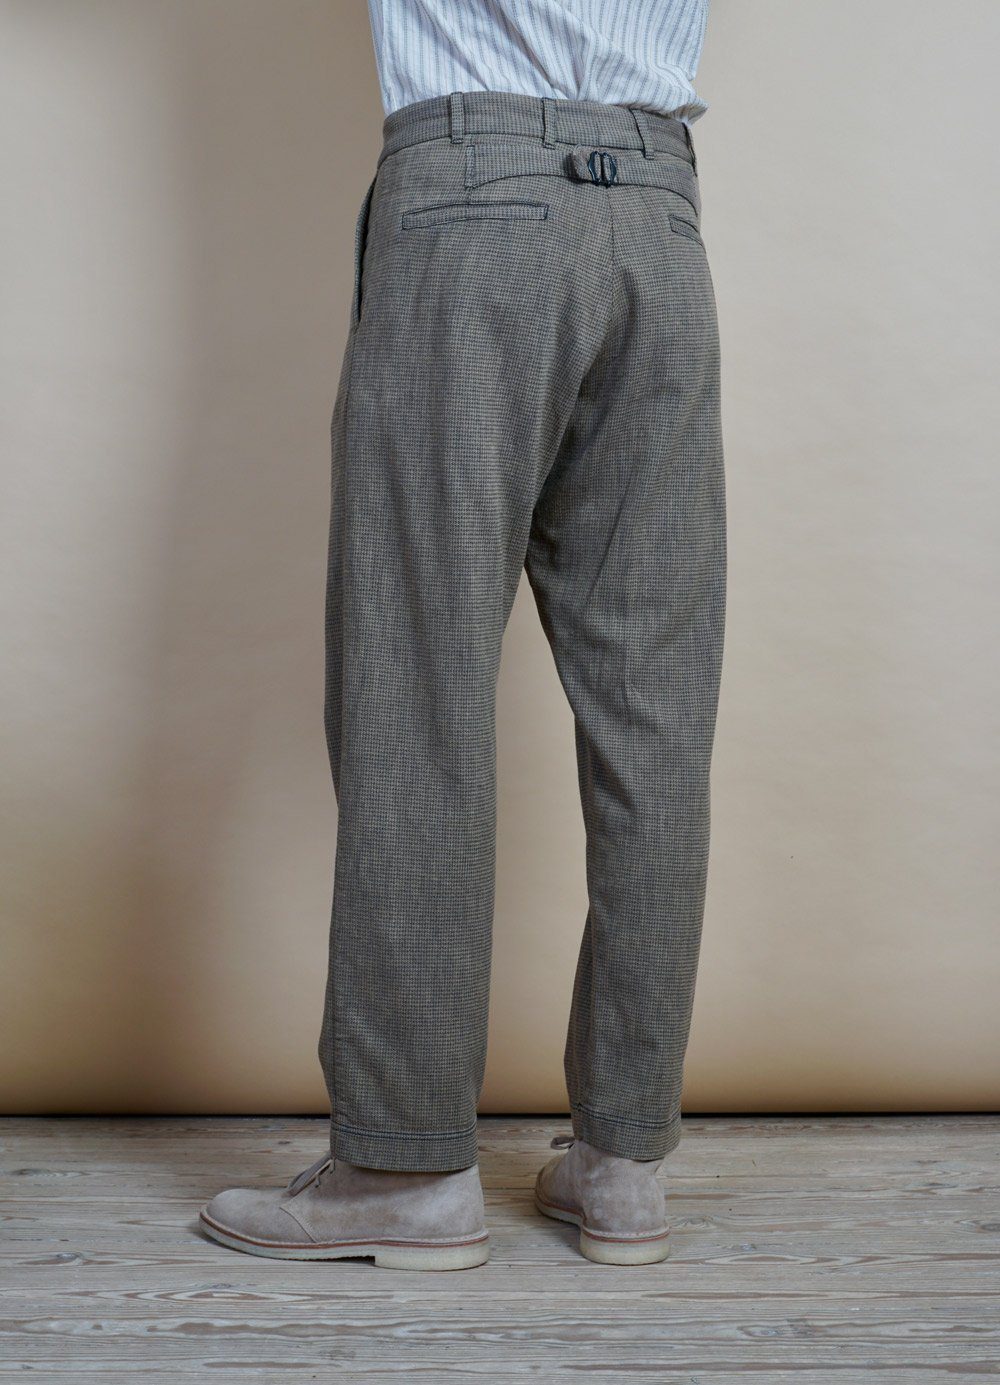 HANSEN GARMENTS - KIAN | Wide Fit Trousers | Lion - HANSEN Garments